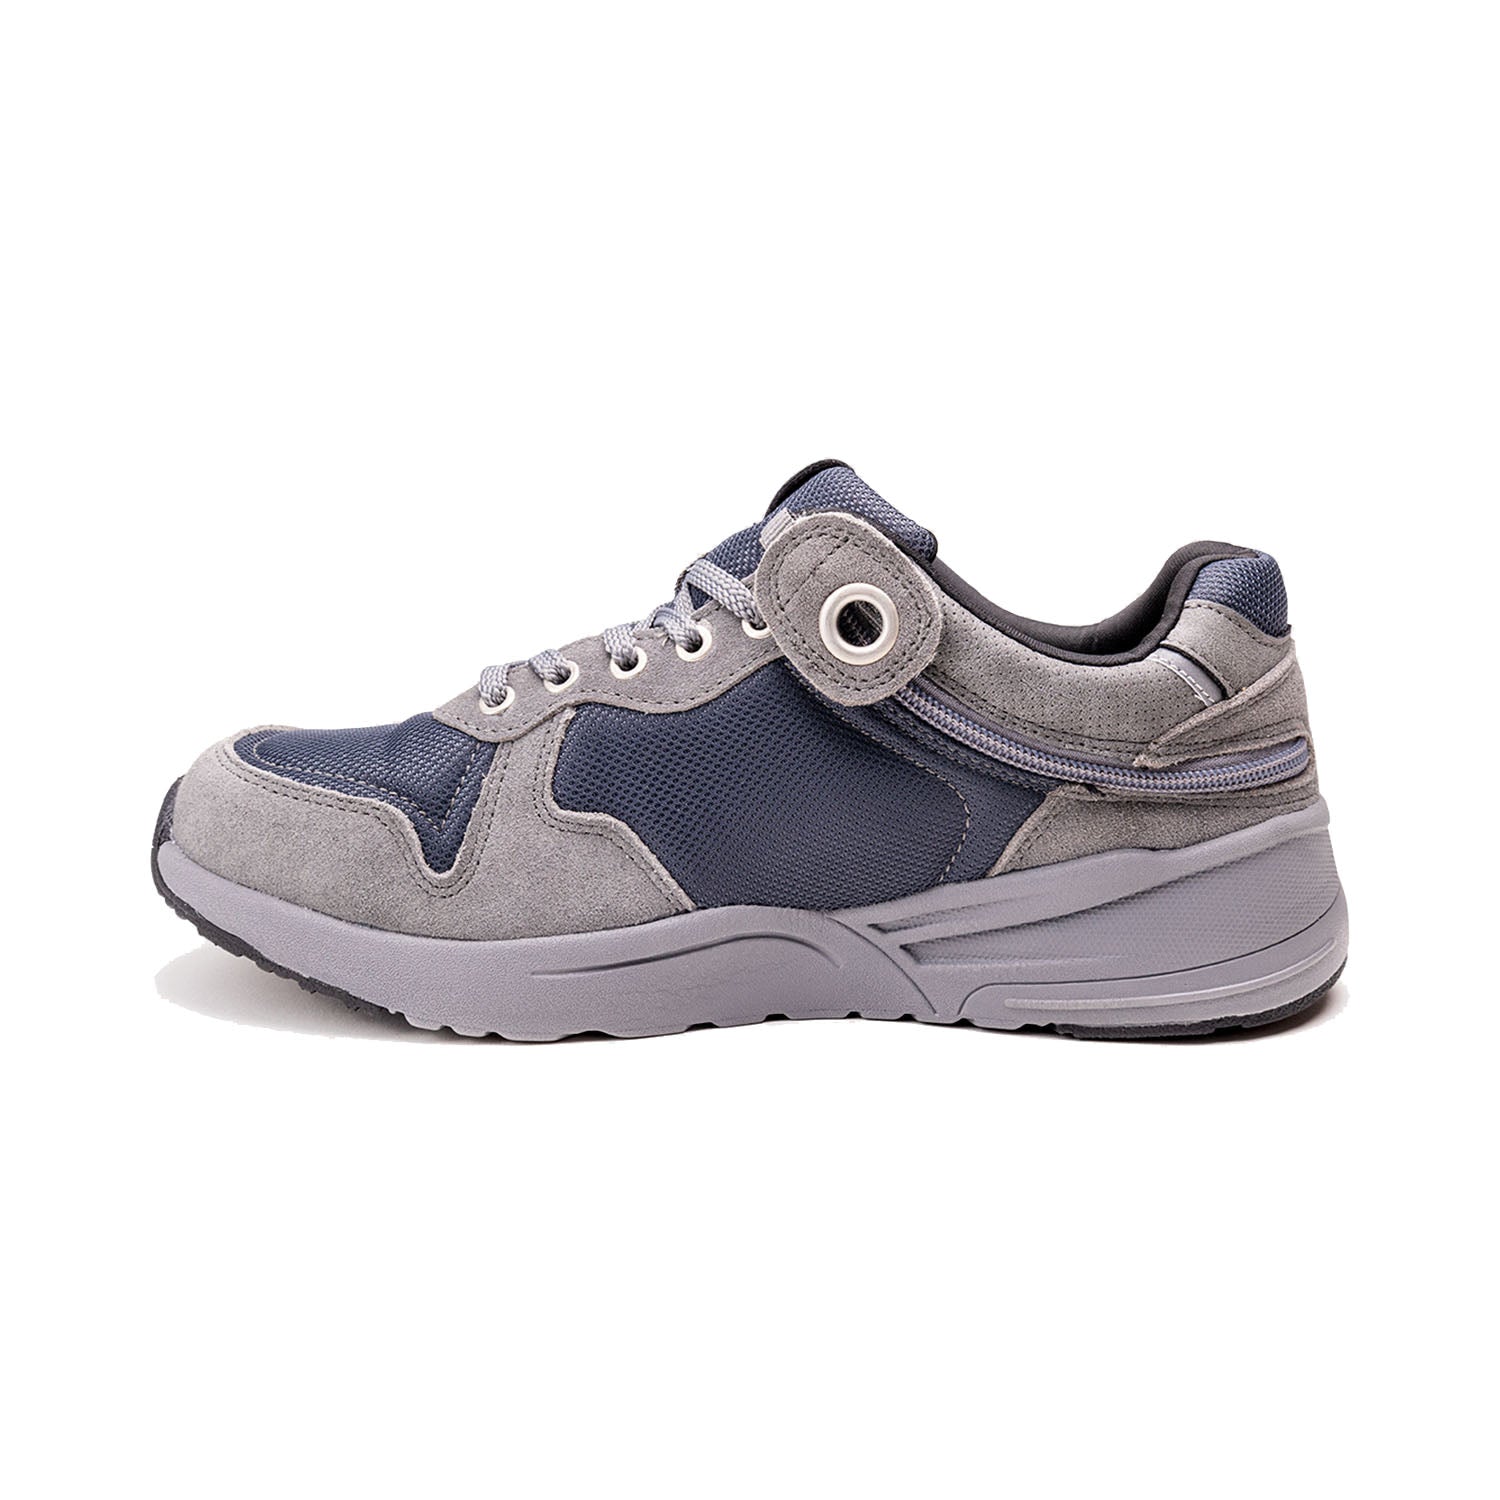 Medium grey mens shoe with light grey bottom, dark grey accents, and rear zipper access.